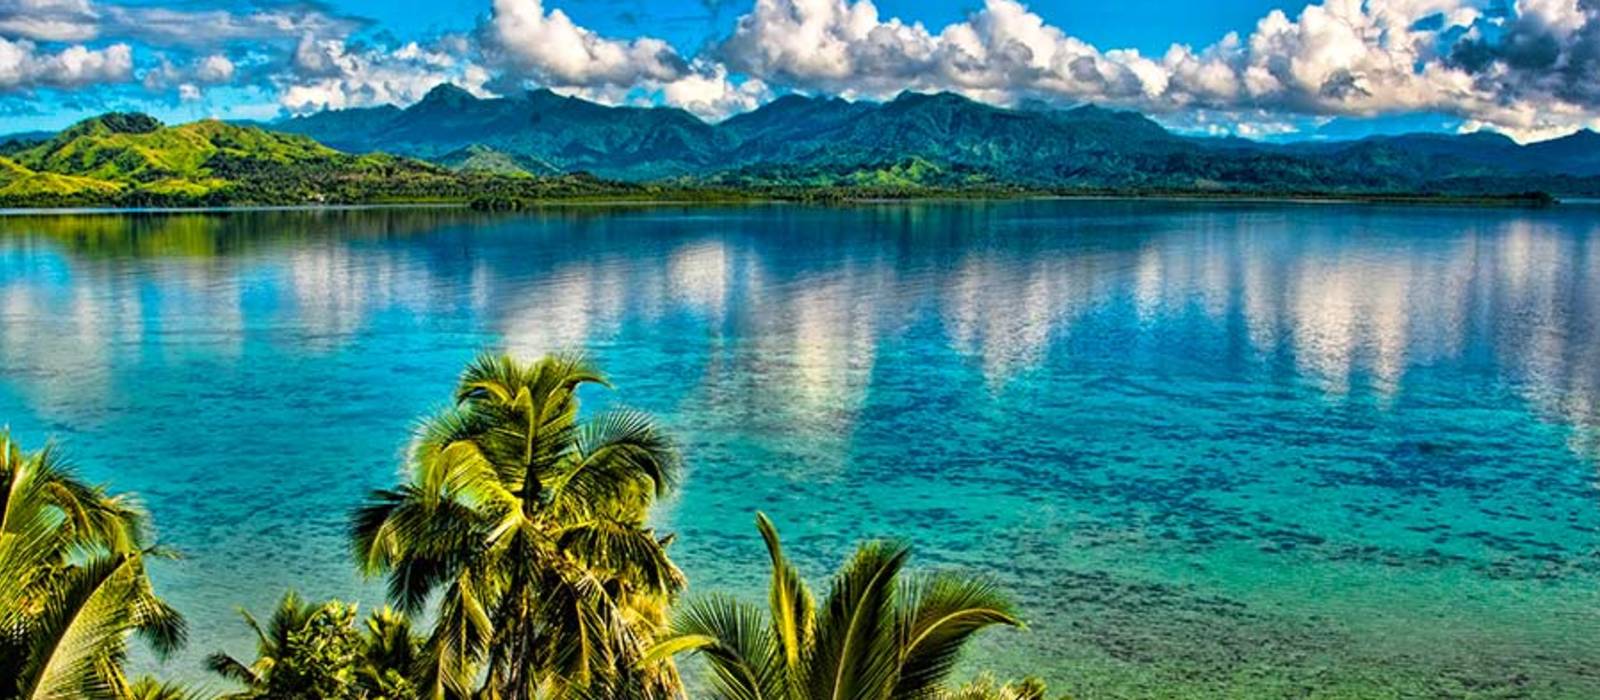 Weekly Deals: San Francisco to Nadi Fiji $778 RT Nonstop Airfares on Fiji Airways (Flexible Ticket SUMMER Travel May-August 2022)